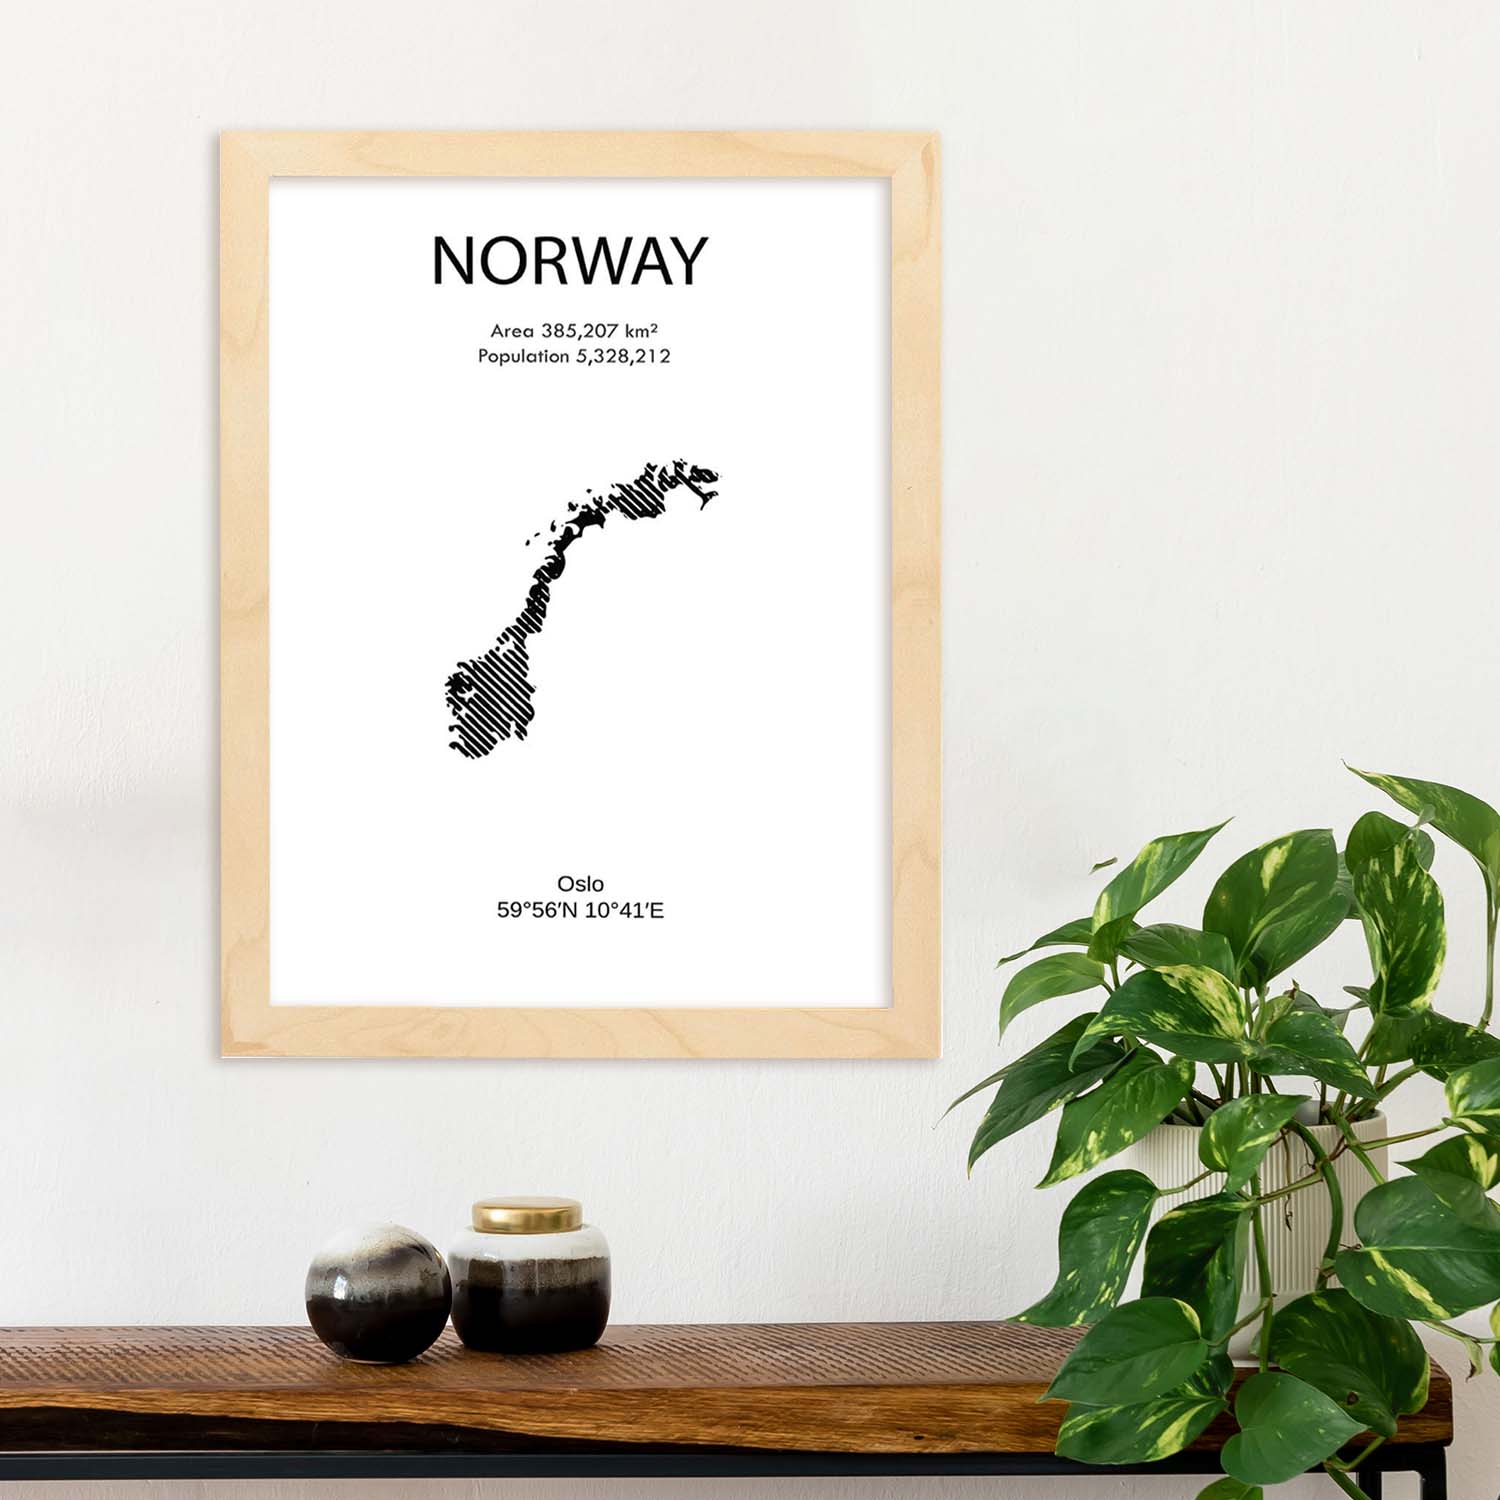 Poster de Noruega. Láminas de paises y continentes del mundo.-Artwork-Nacnic-Nacnic Estudio SL